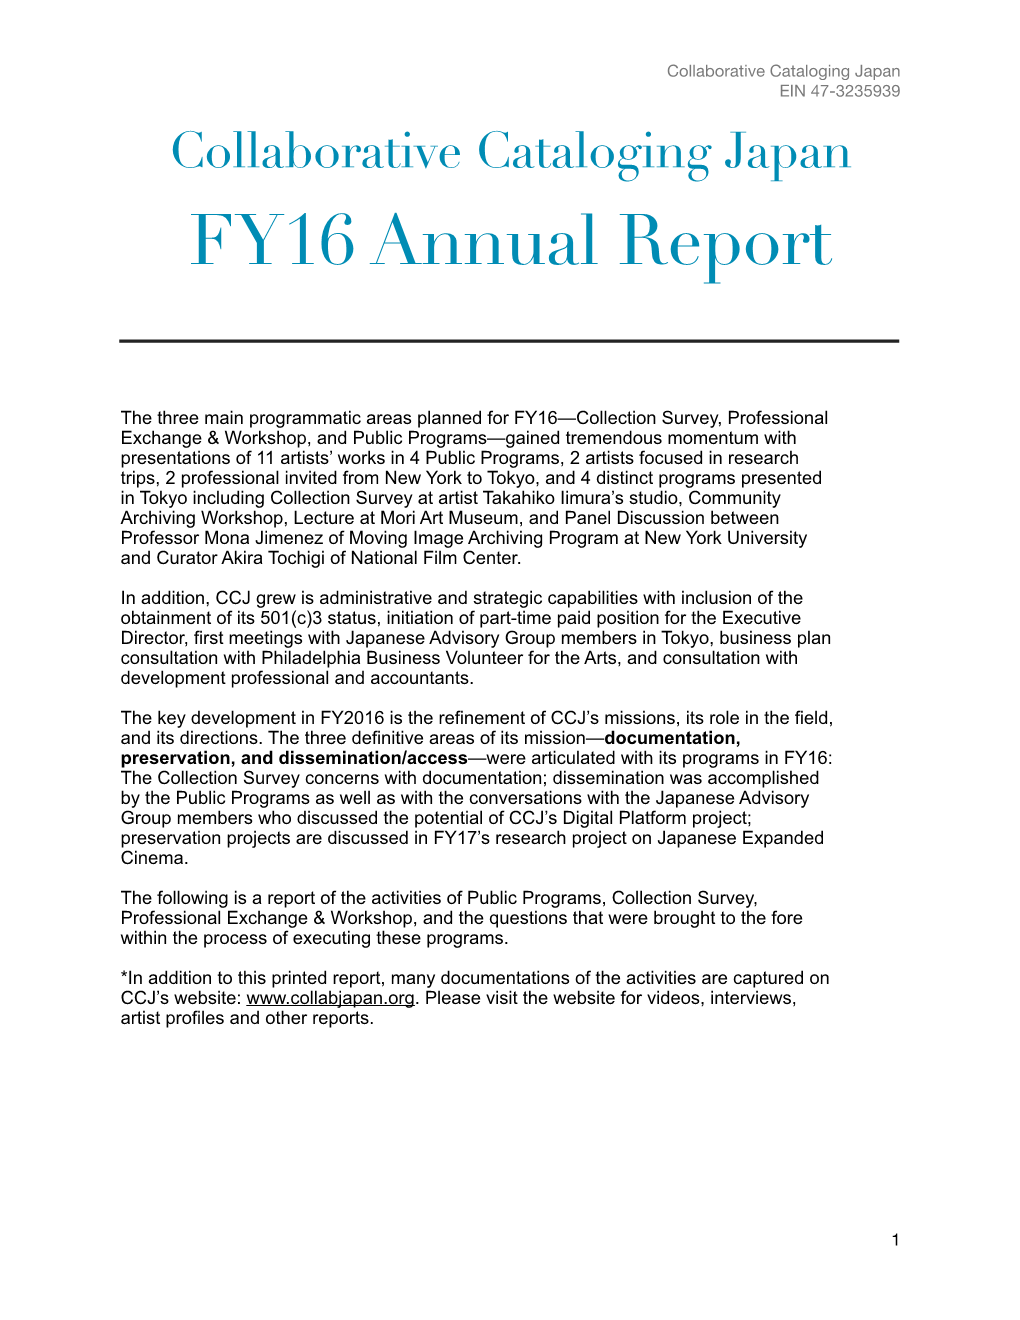 CCJ FY16 Annual Report